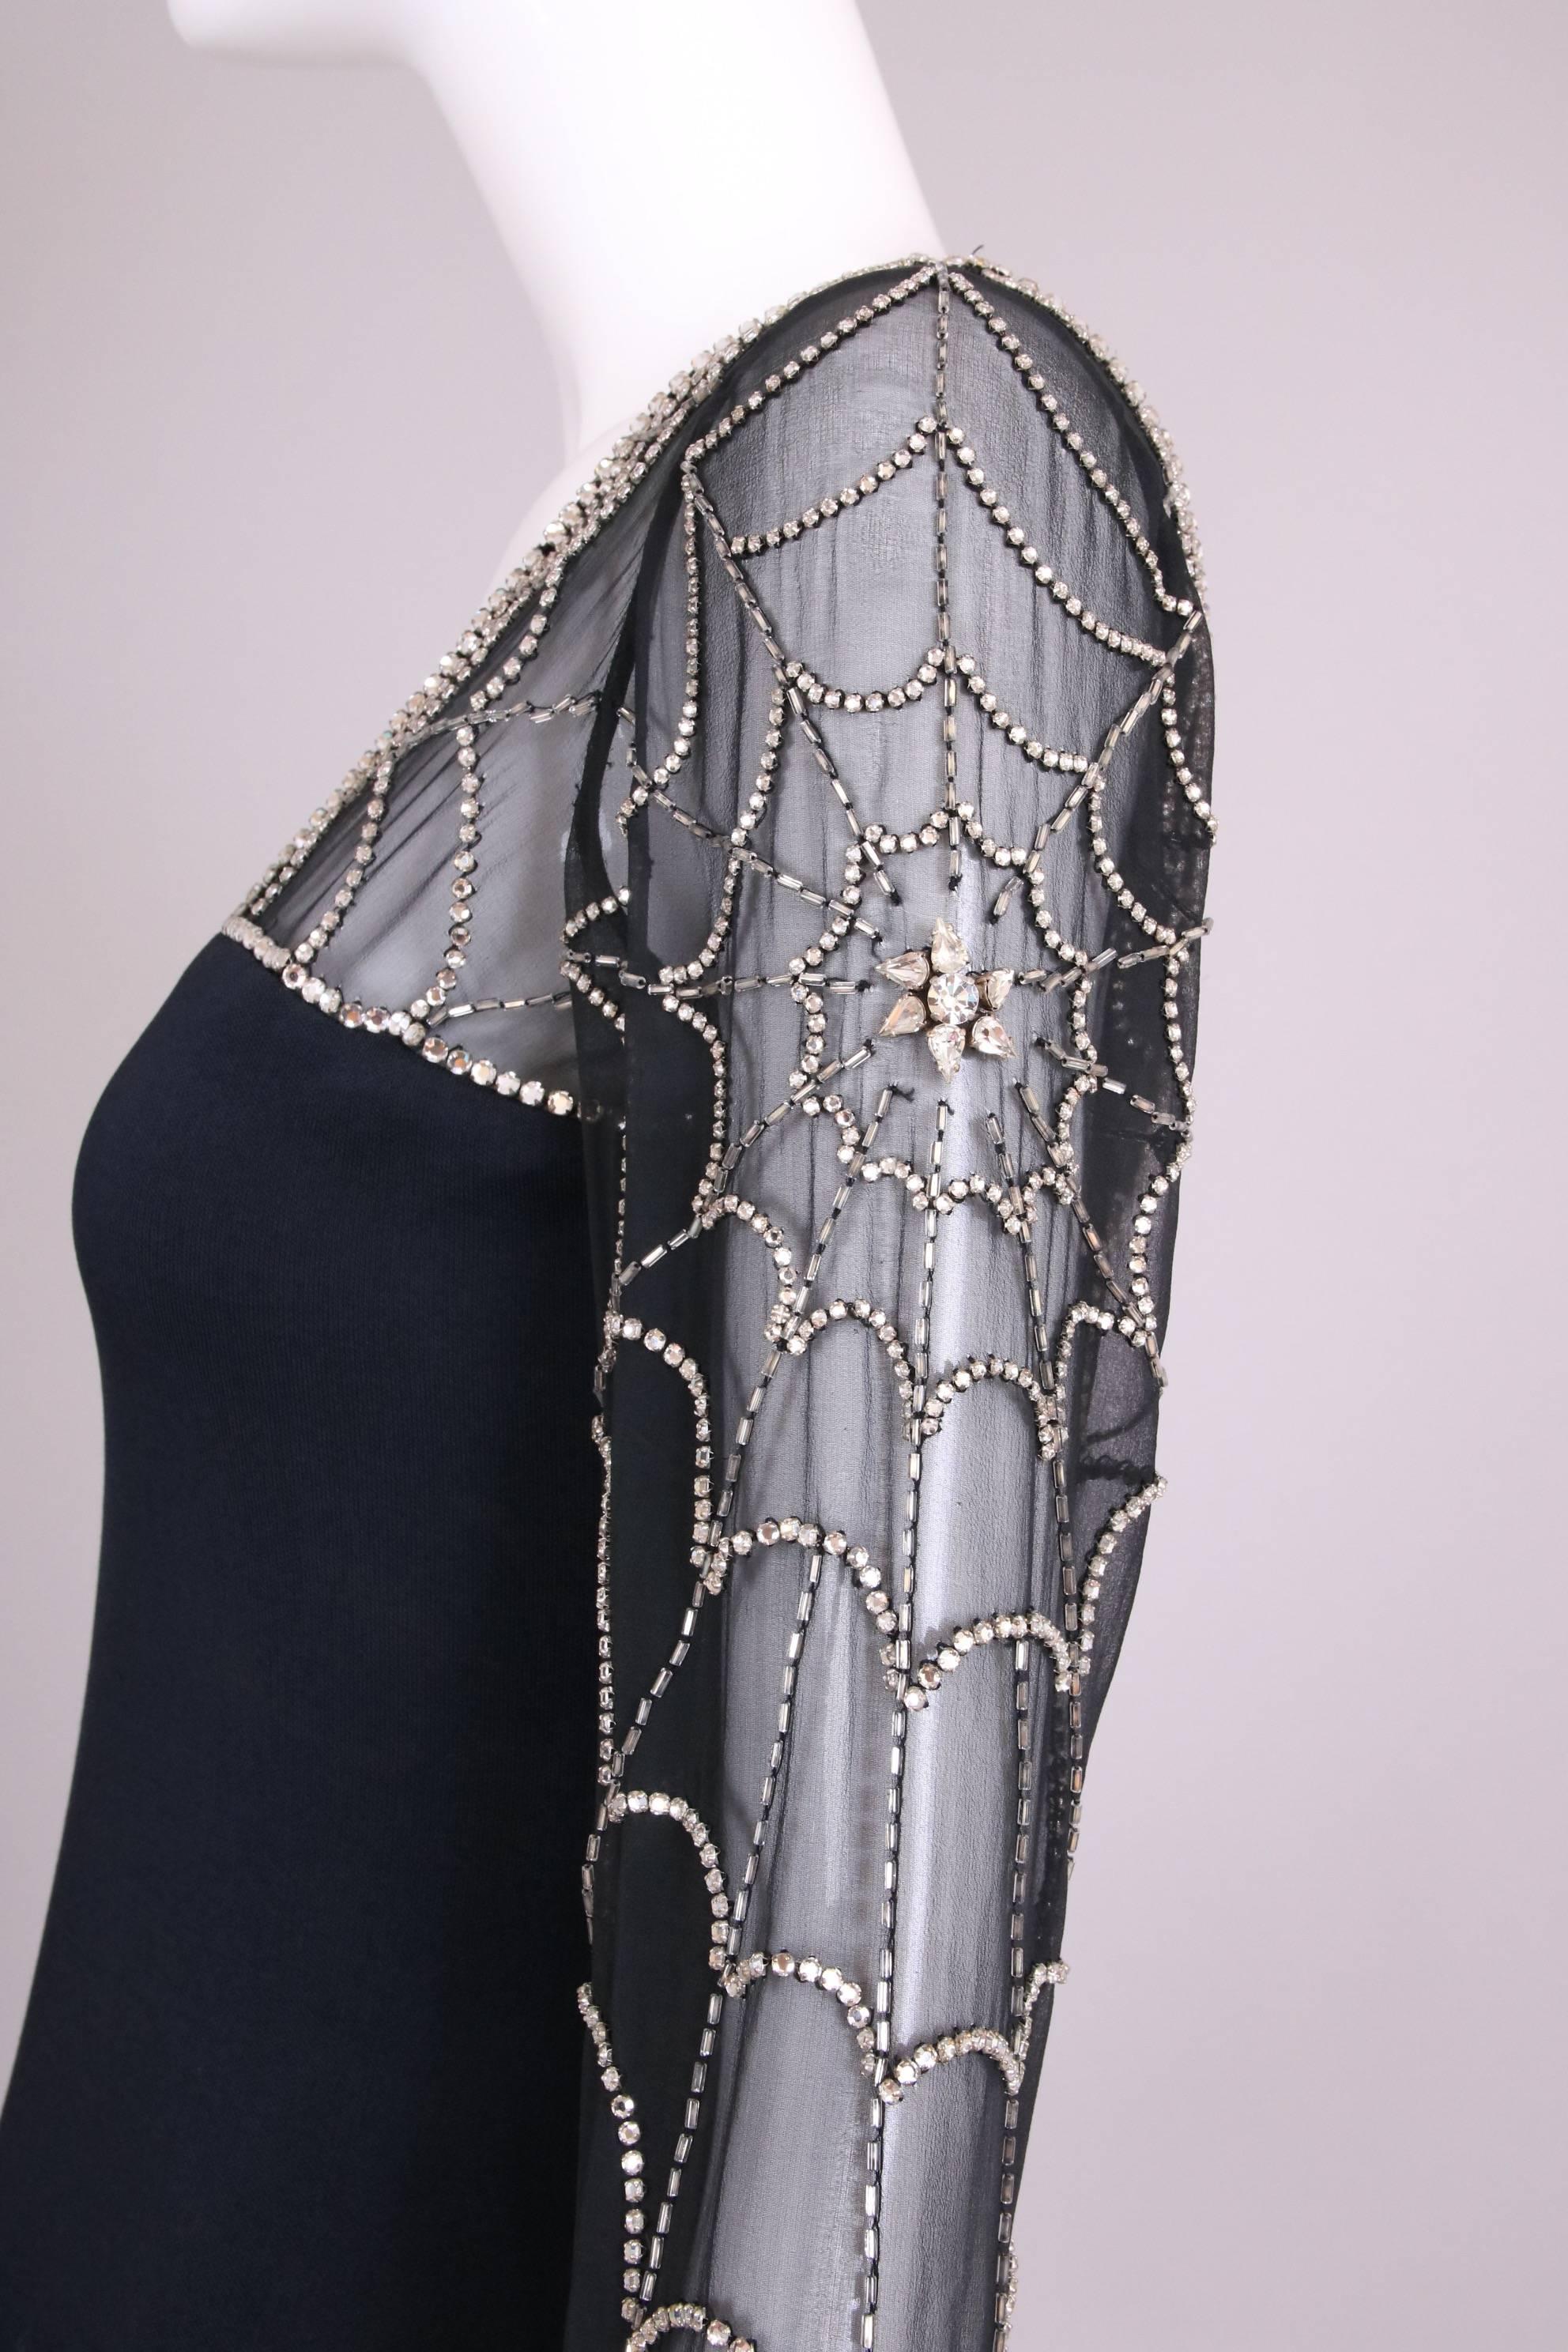 Mollie Parnis Black Silk Jersey Evening Dress Gown w/Beaded Spiderweb Sleeves 3